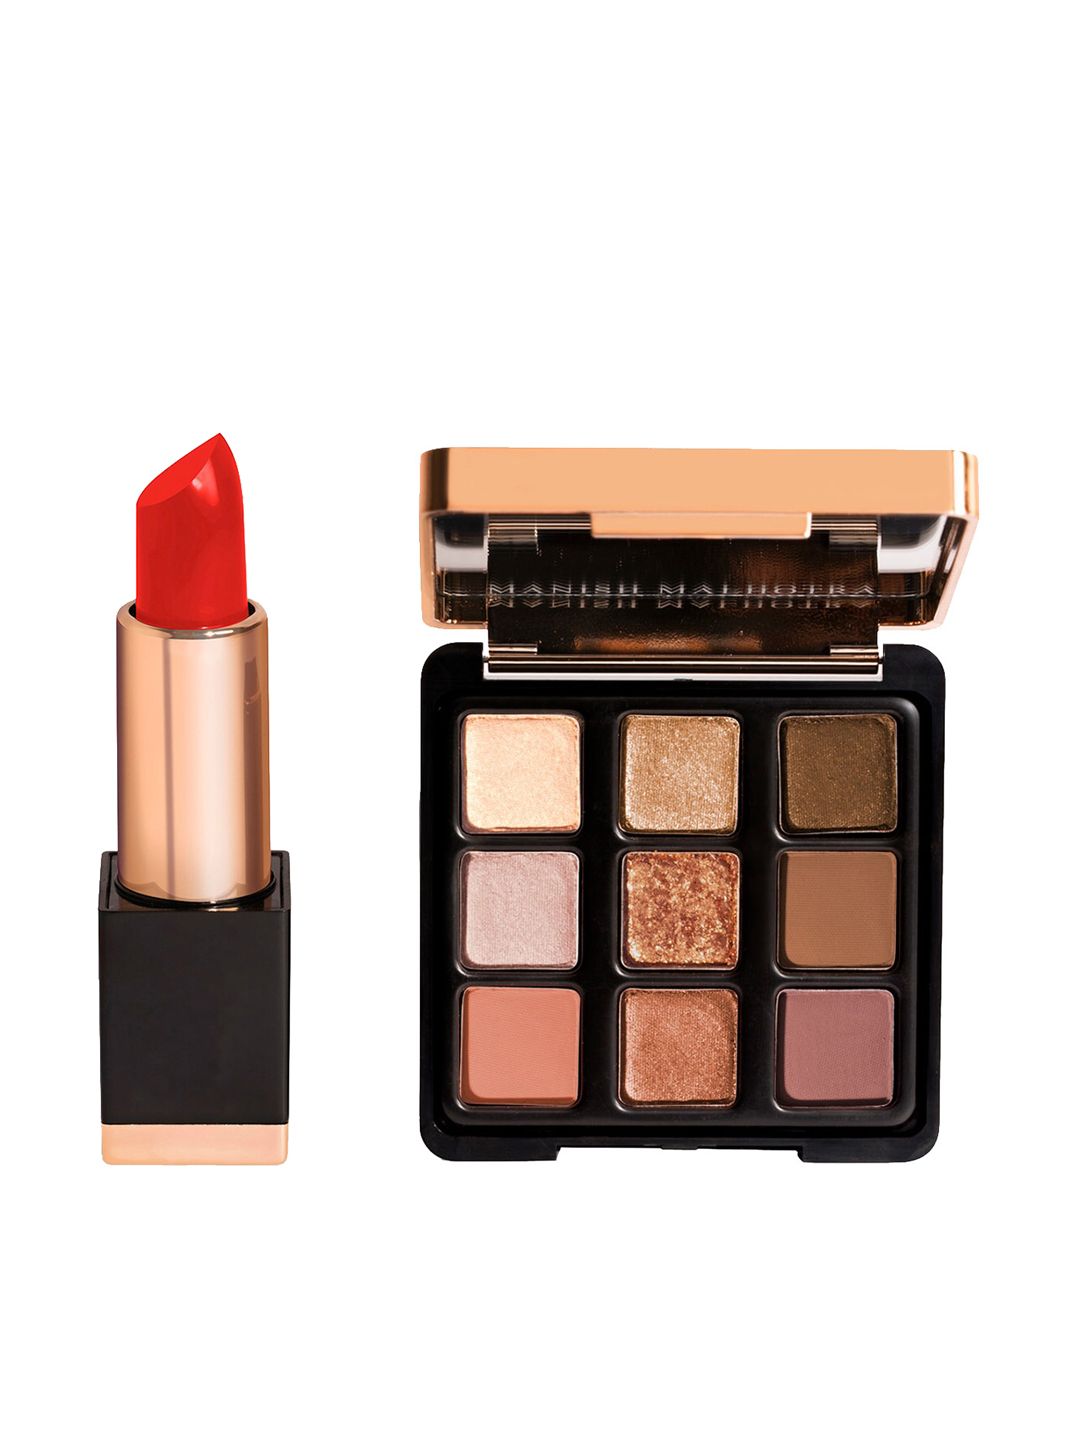 MyGlamm Manish Malhotra Beauty Set of Eyeshadow Palette & Hi-Shine Lipstick Price in India